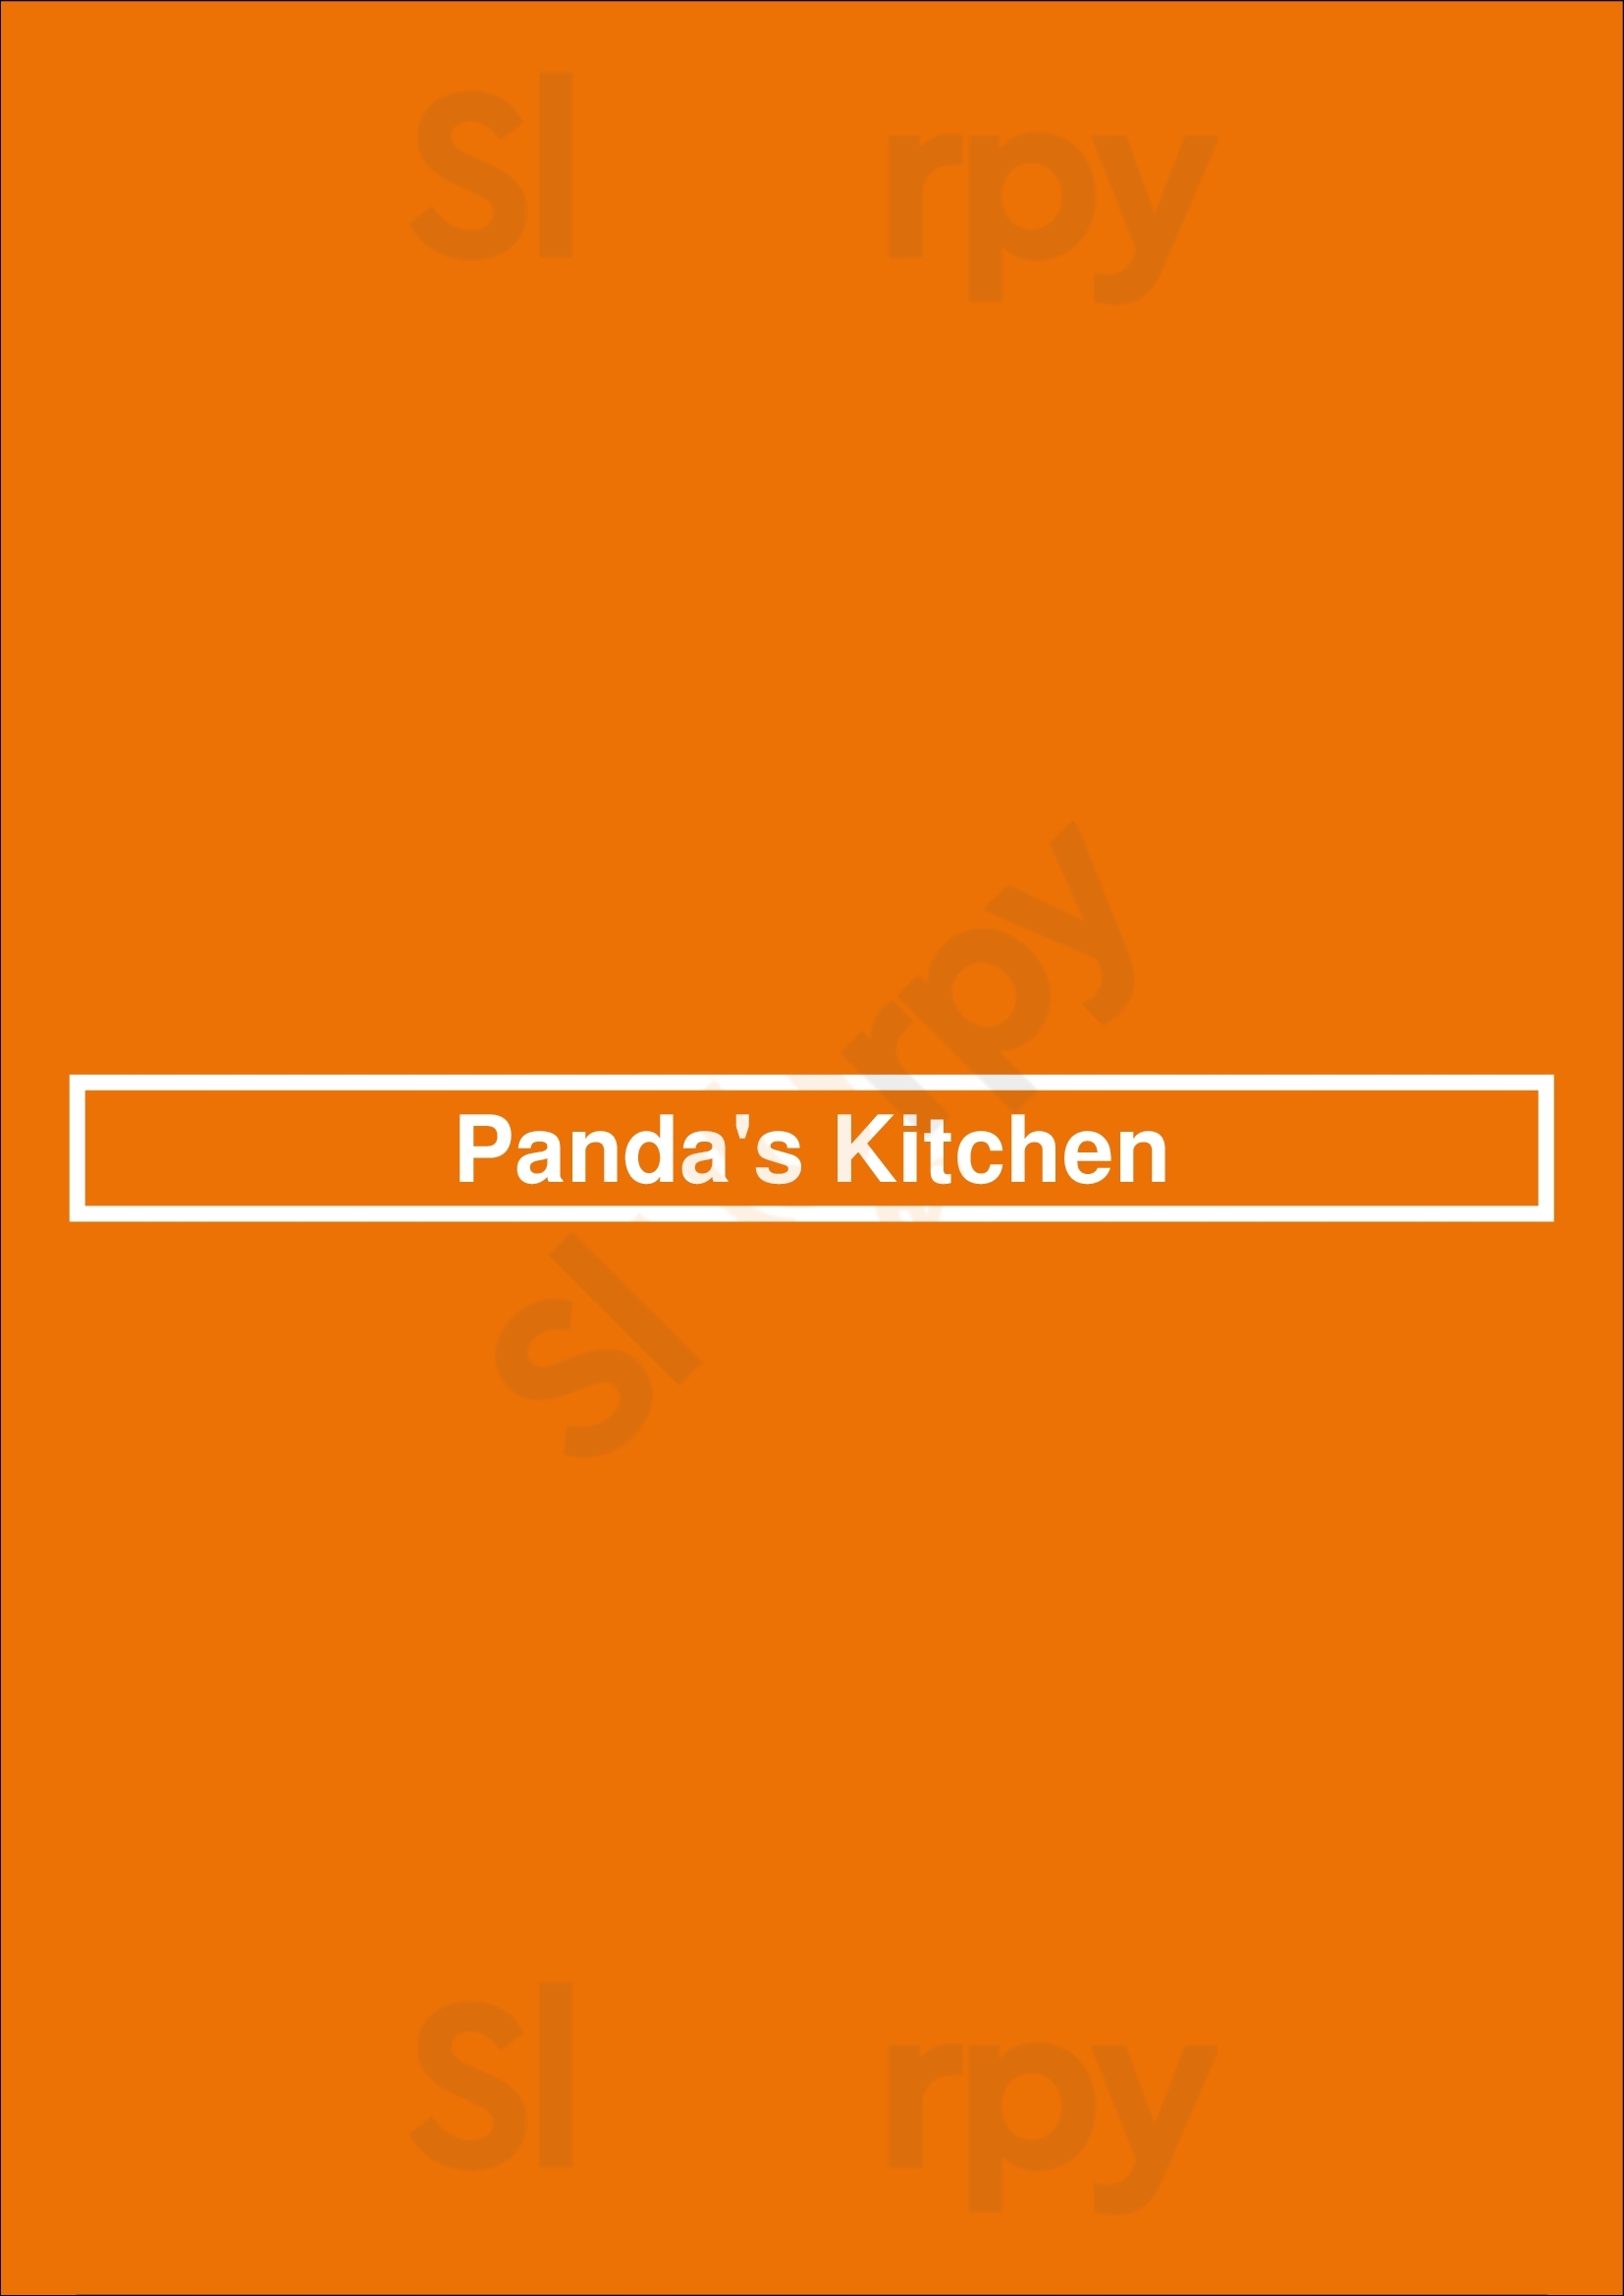 Panda's Kitchen Amsterdam Menu - 1